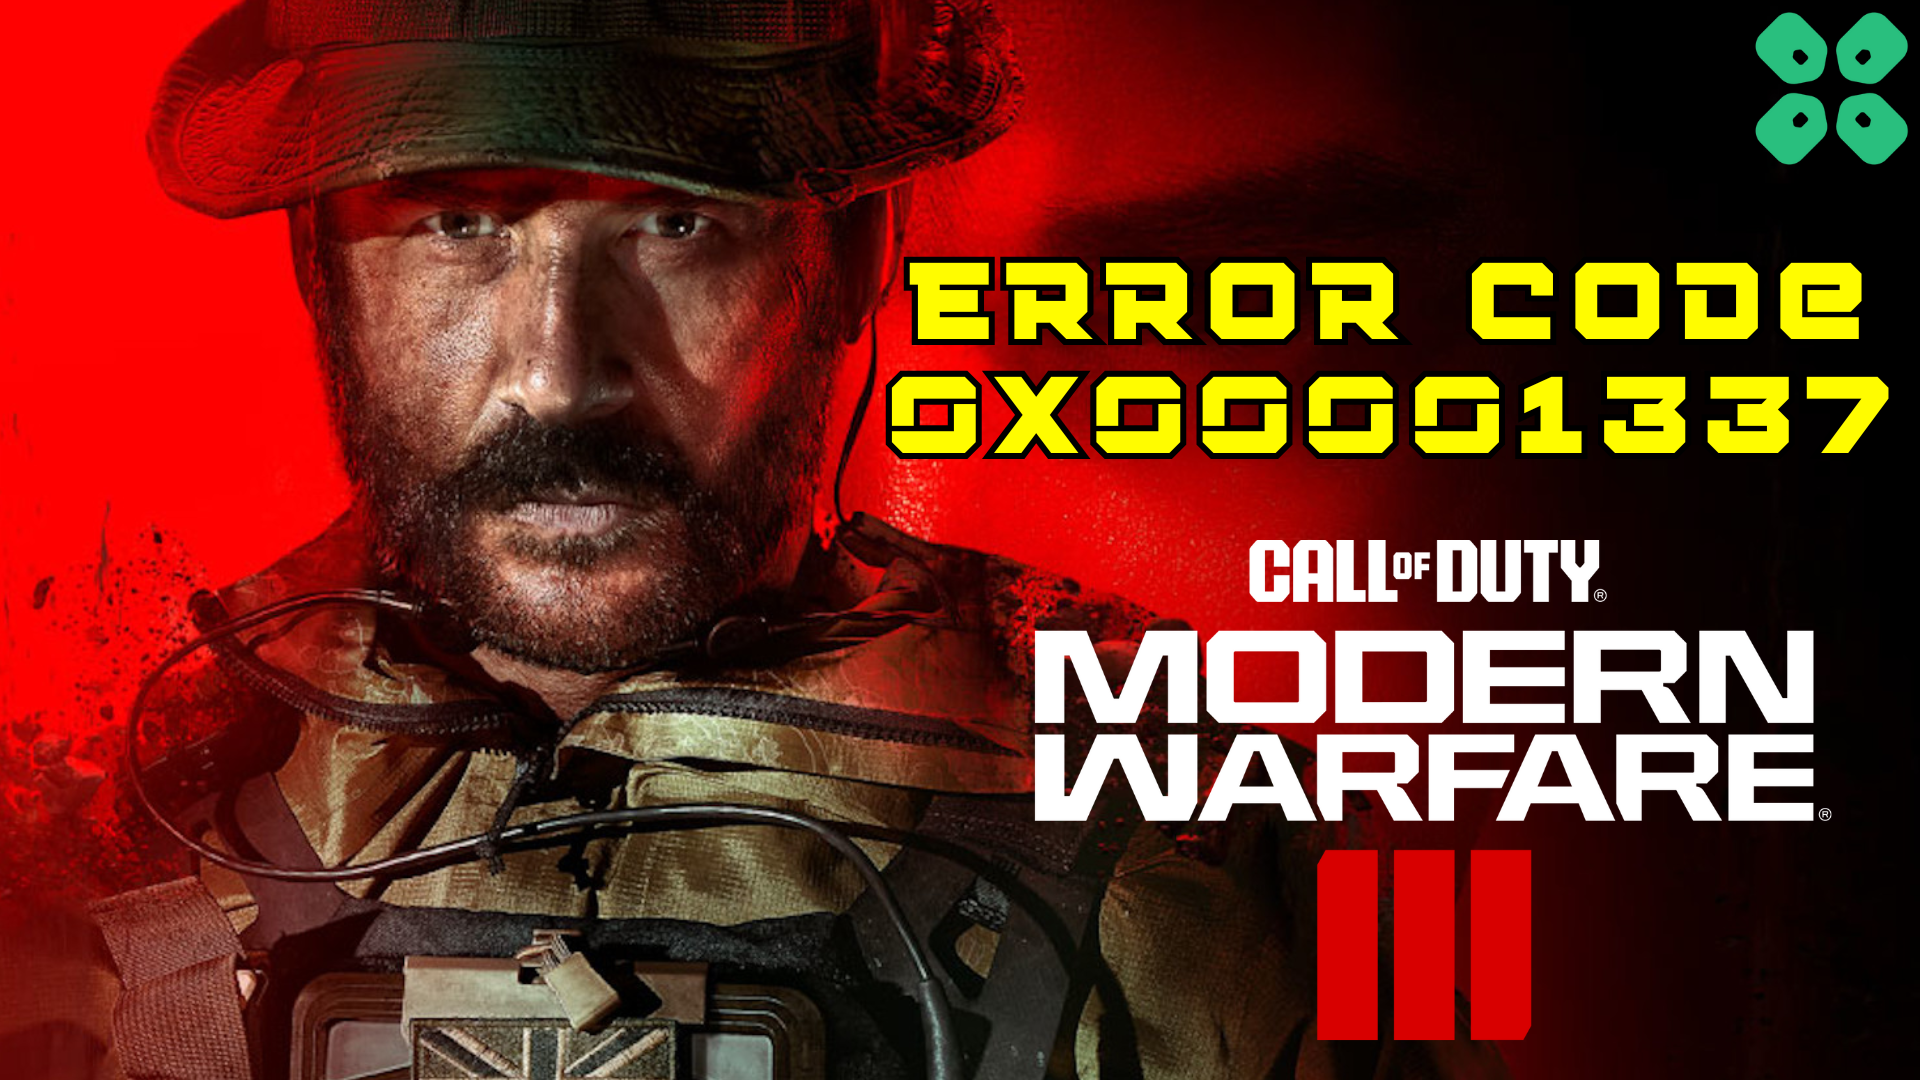 How to Fix Call of Duty MW3 Error Code 0x00001337